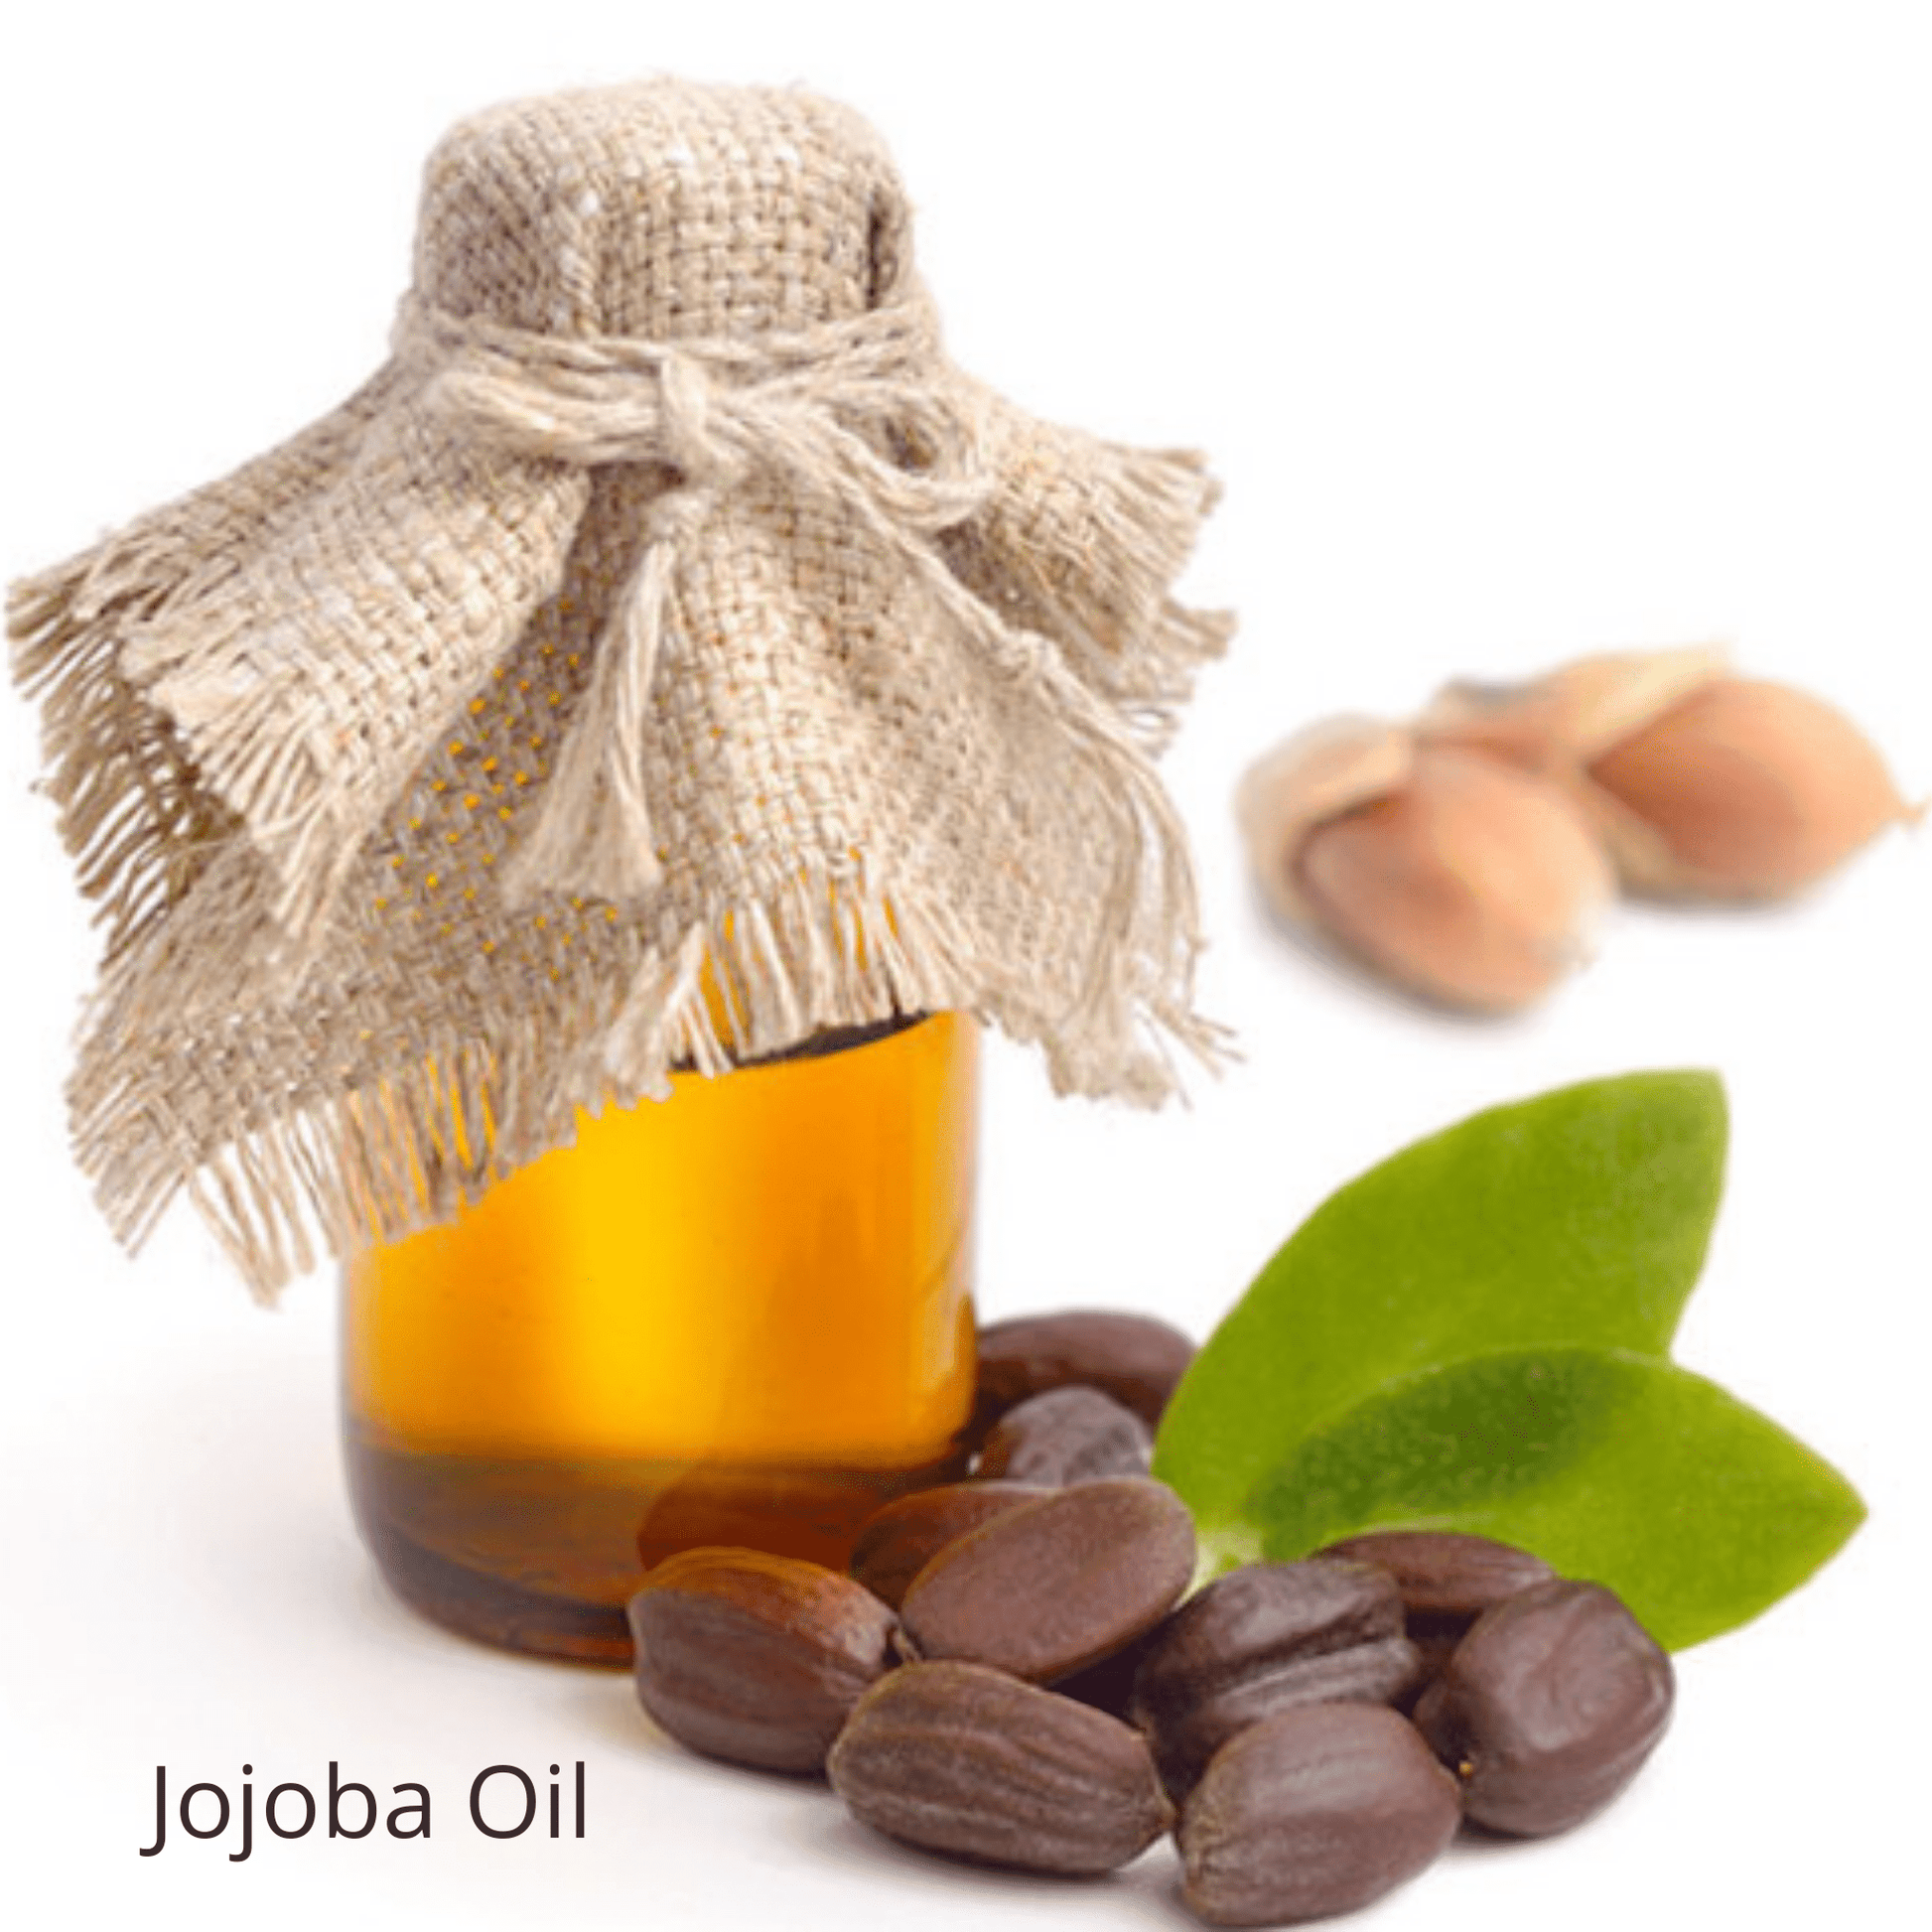 Be Green Bath and Body Shaving Foam contains jojoba oil